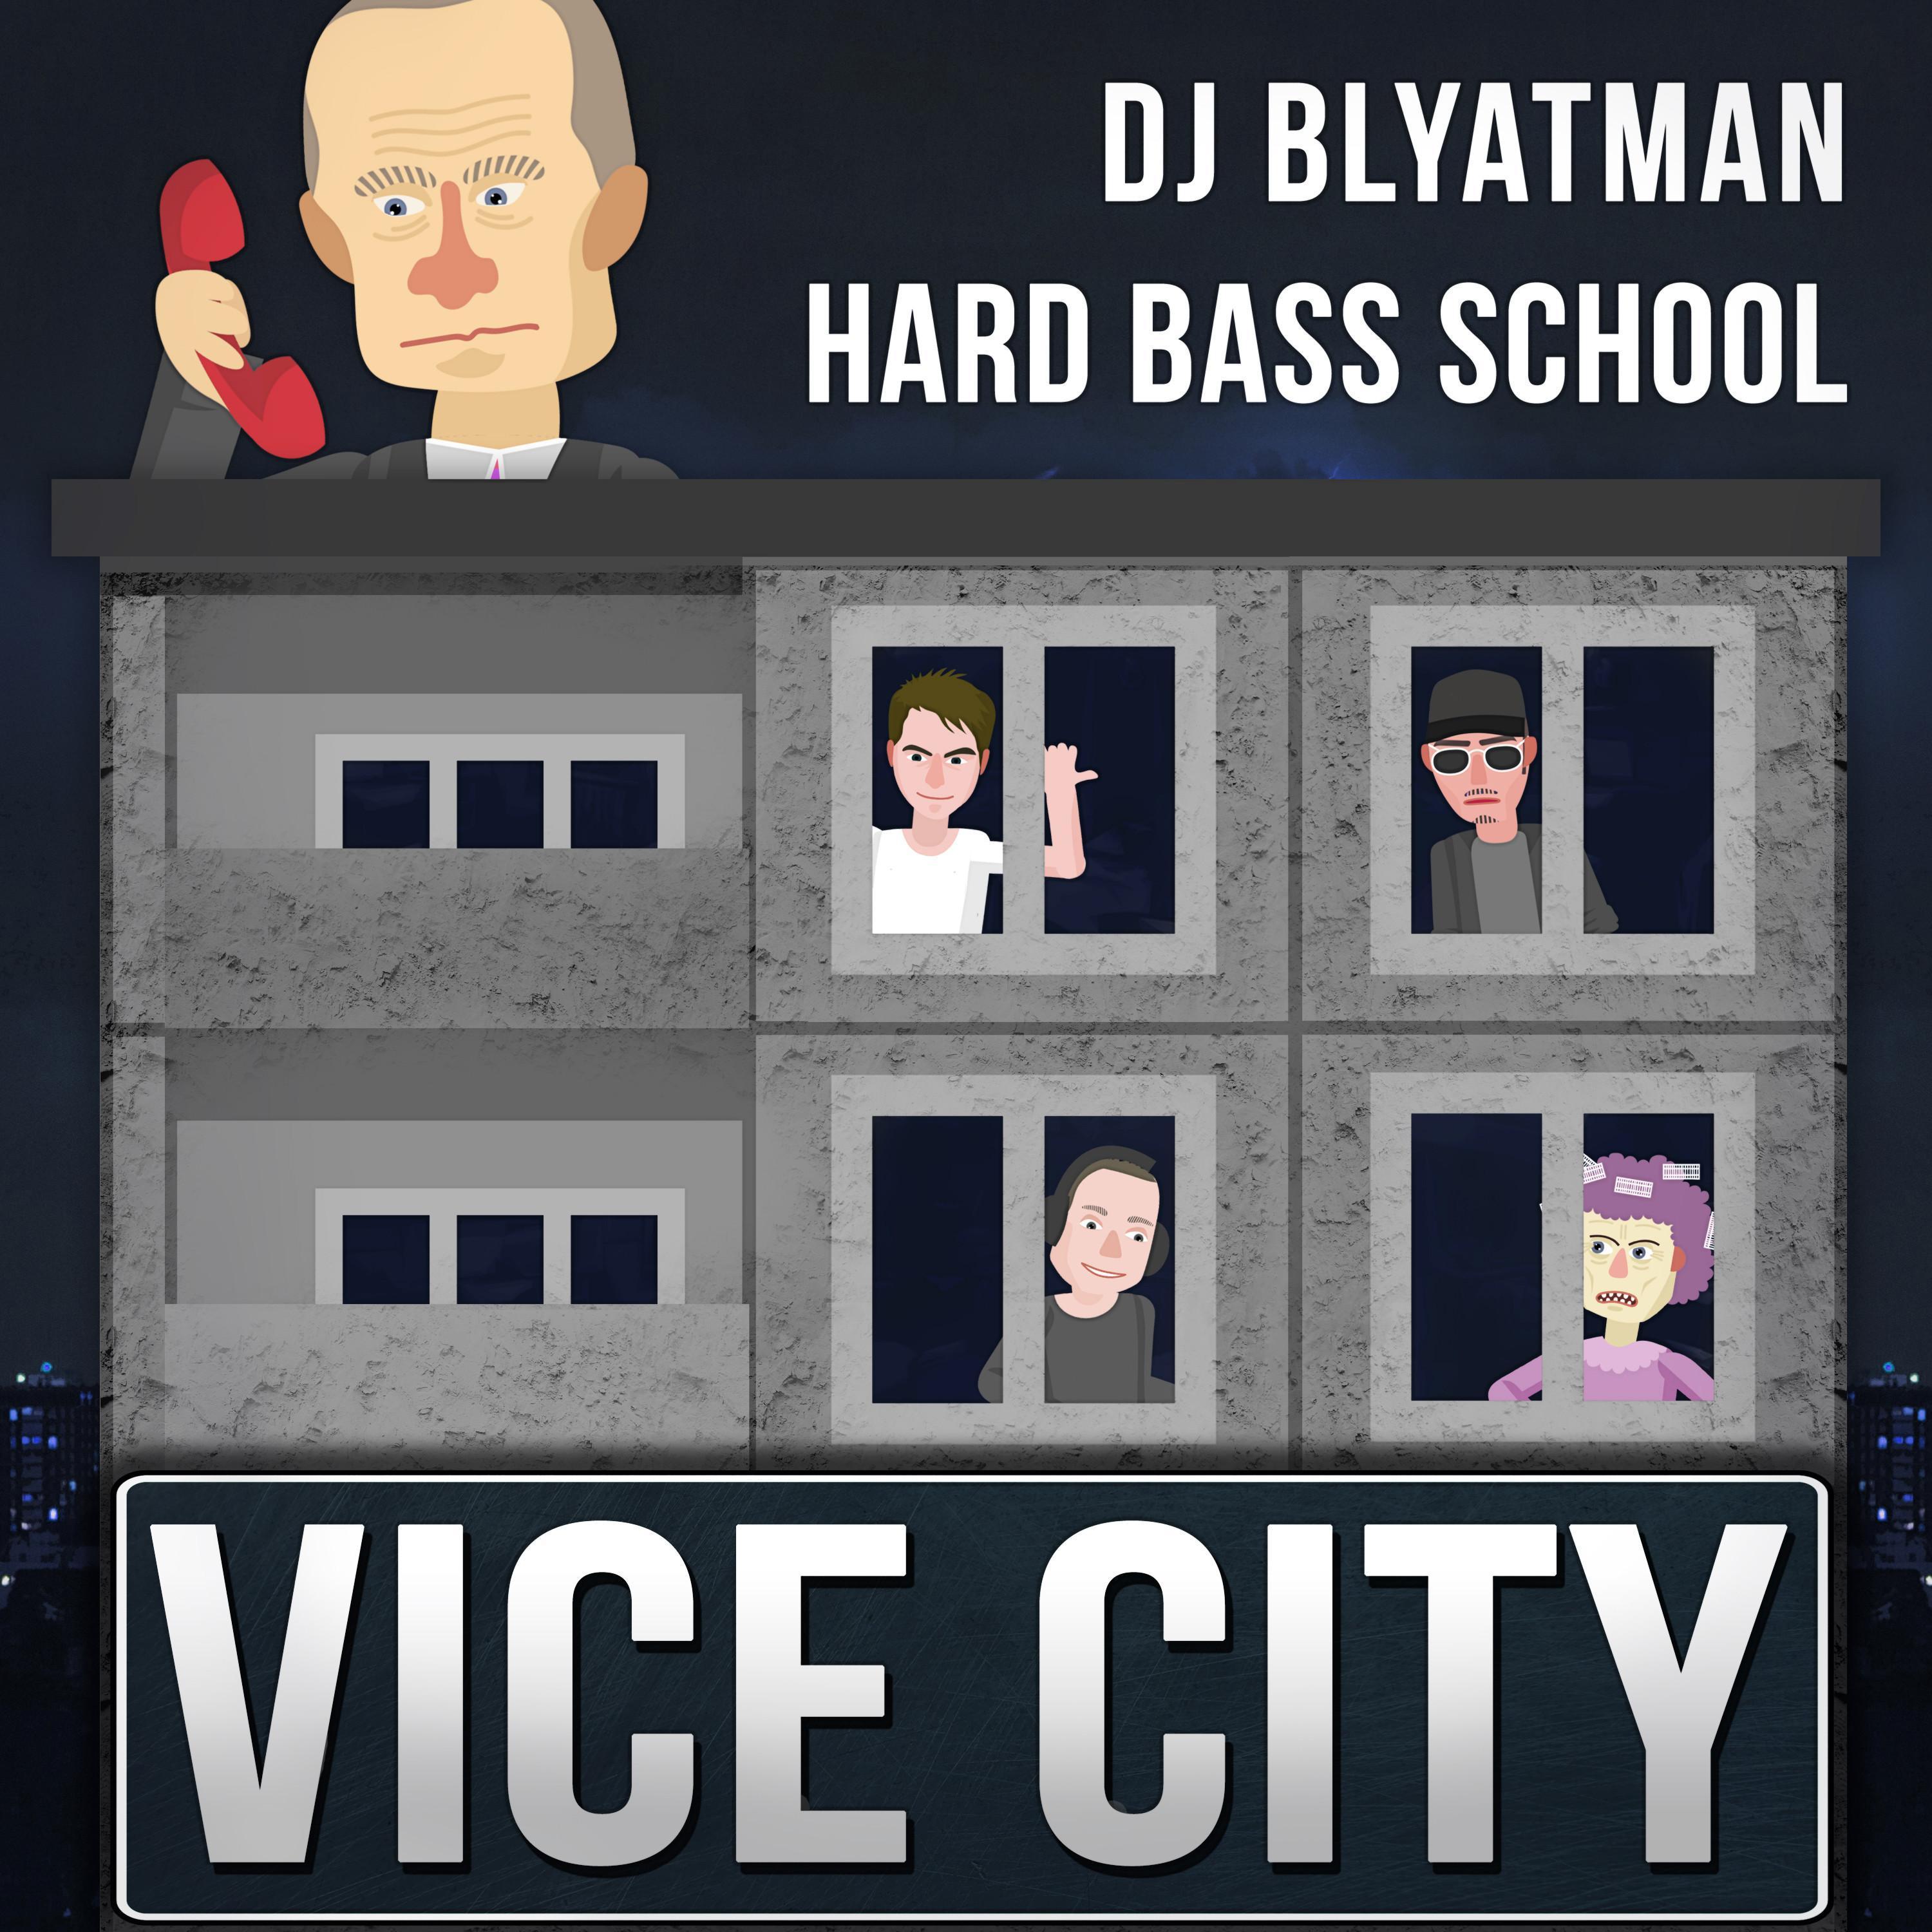 Песня хард басс. DJ Blyatman hard Bass School vice City. Хард басс скул. Школа танцев Хардбаса. DJ blytmen vice City.